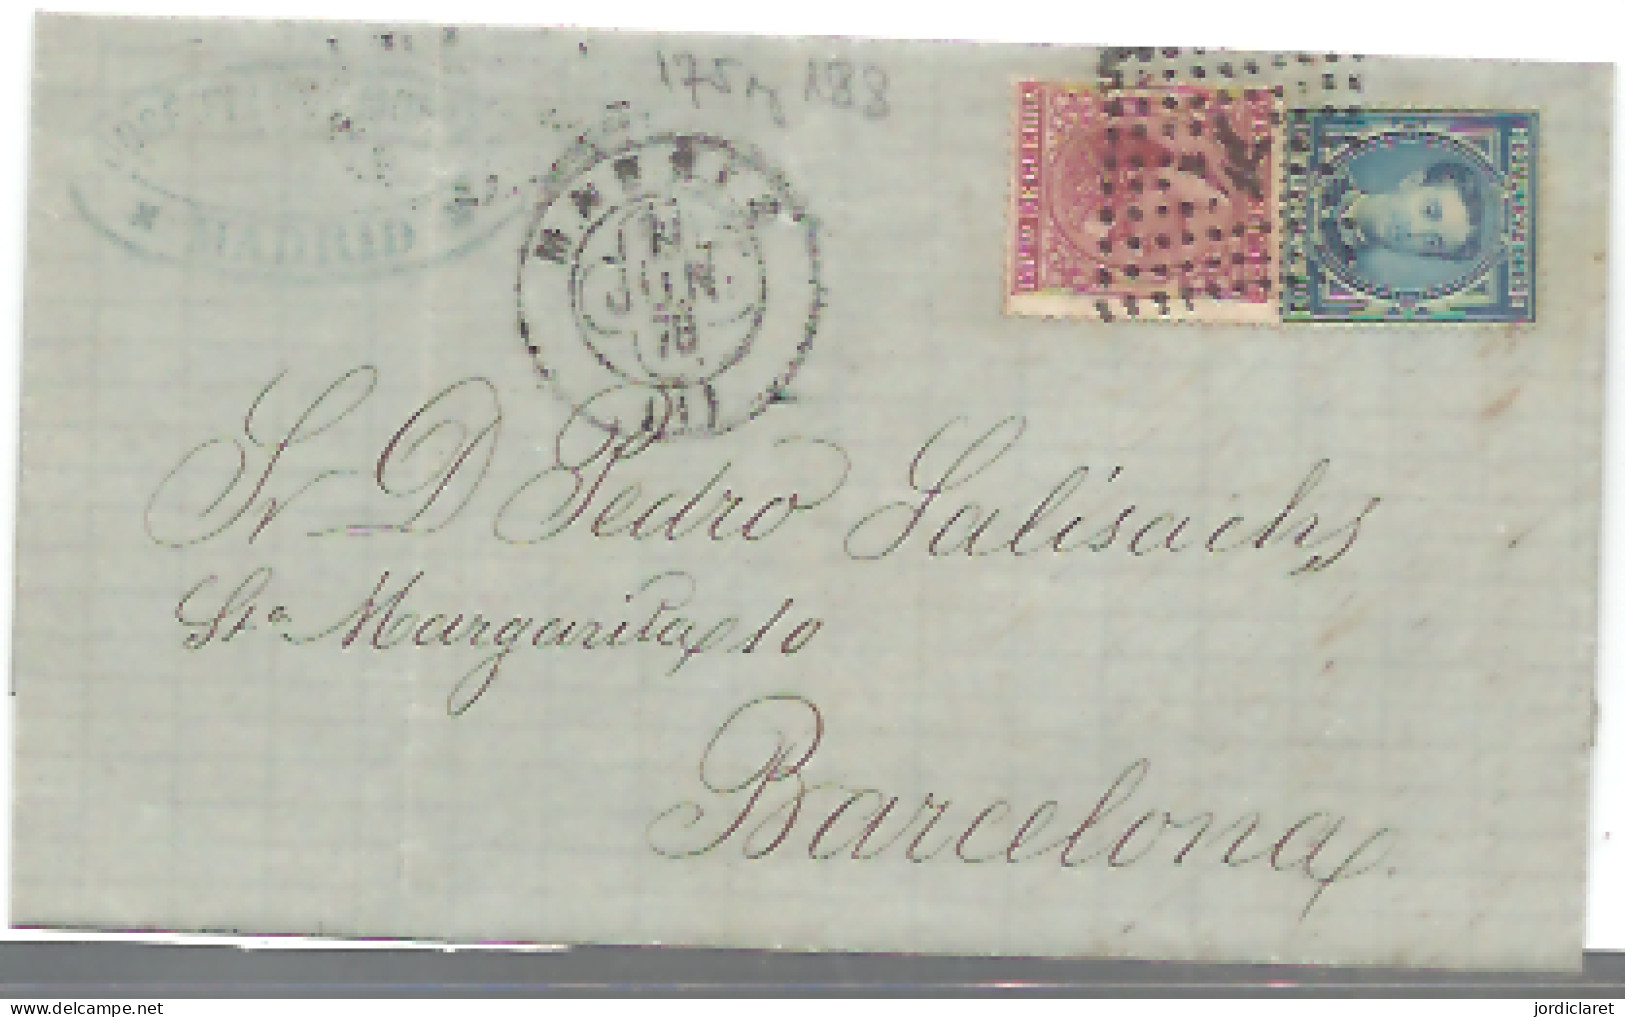 CARTA 1878 MADRID A BARCELONA - Storia Postale